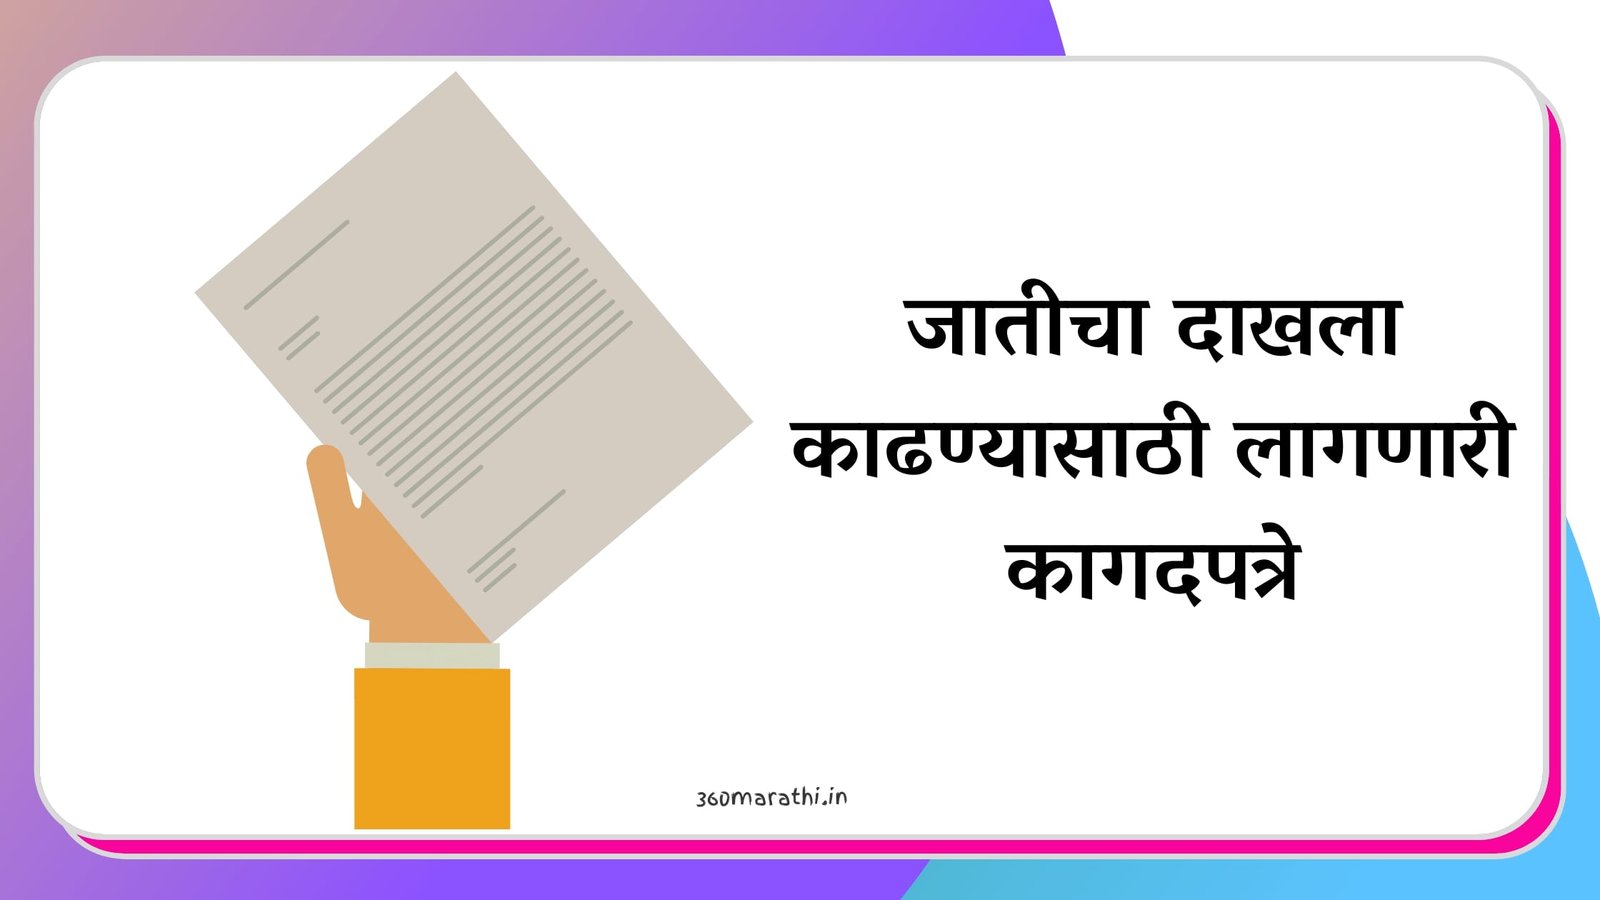 Caste Certificate Documents in Marathi pdf